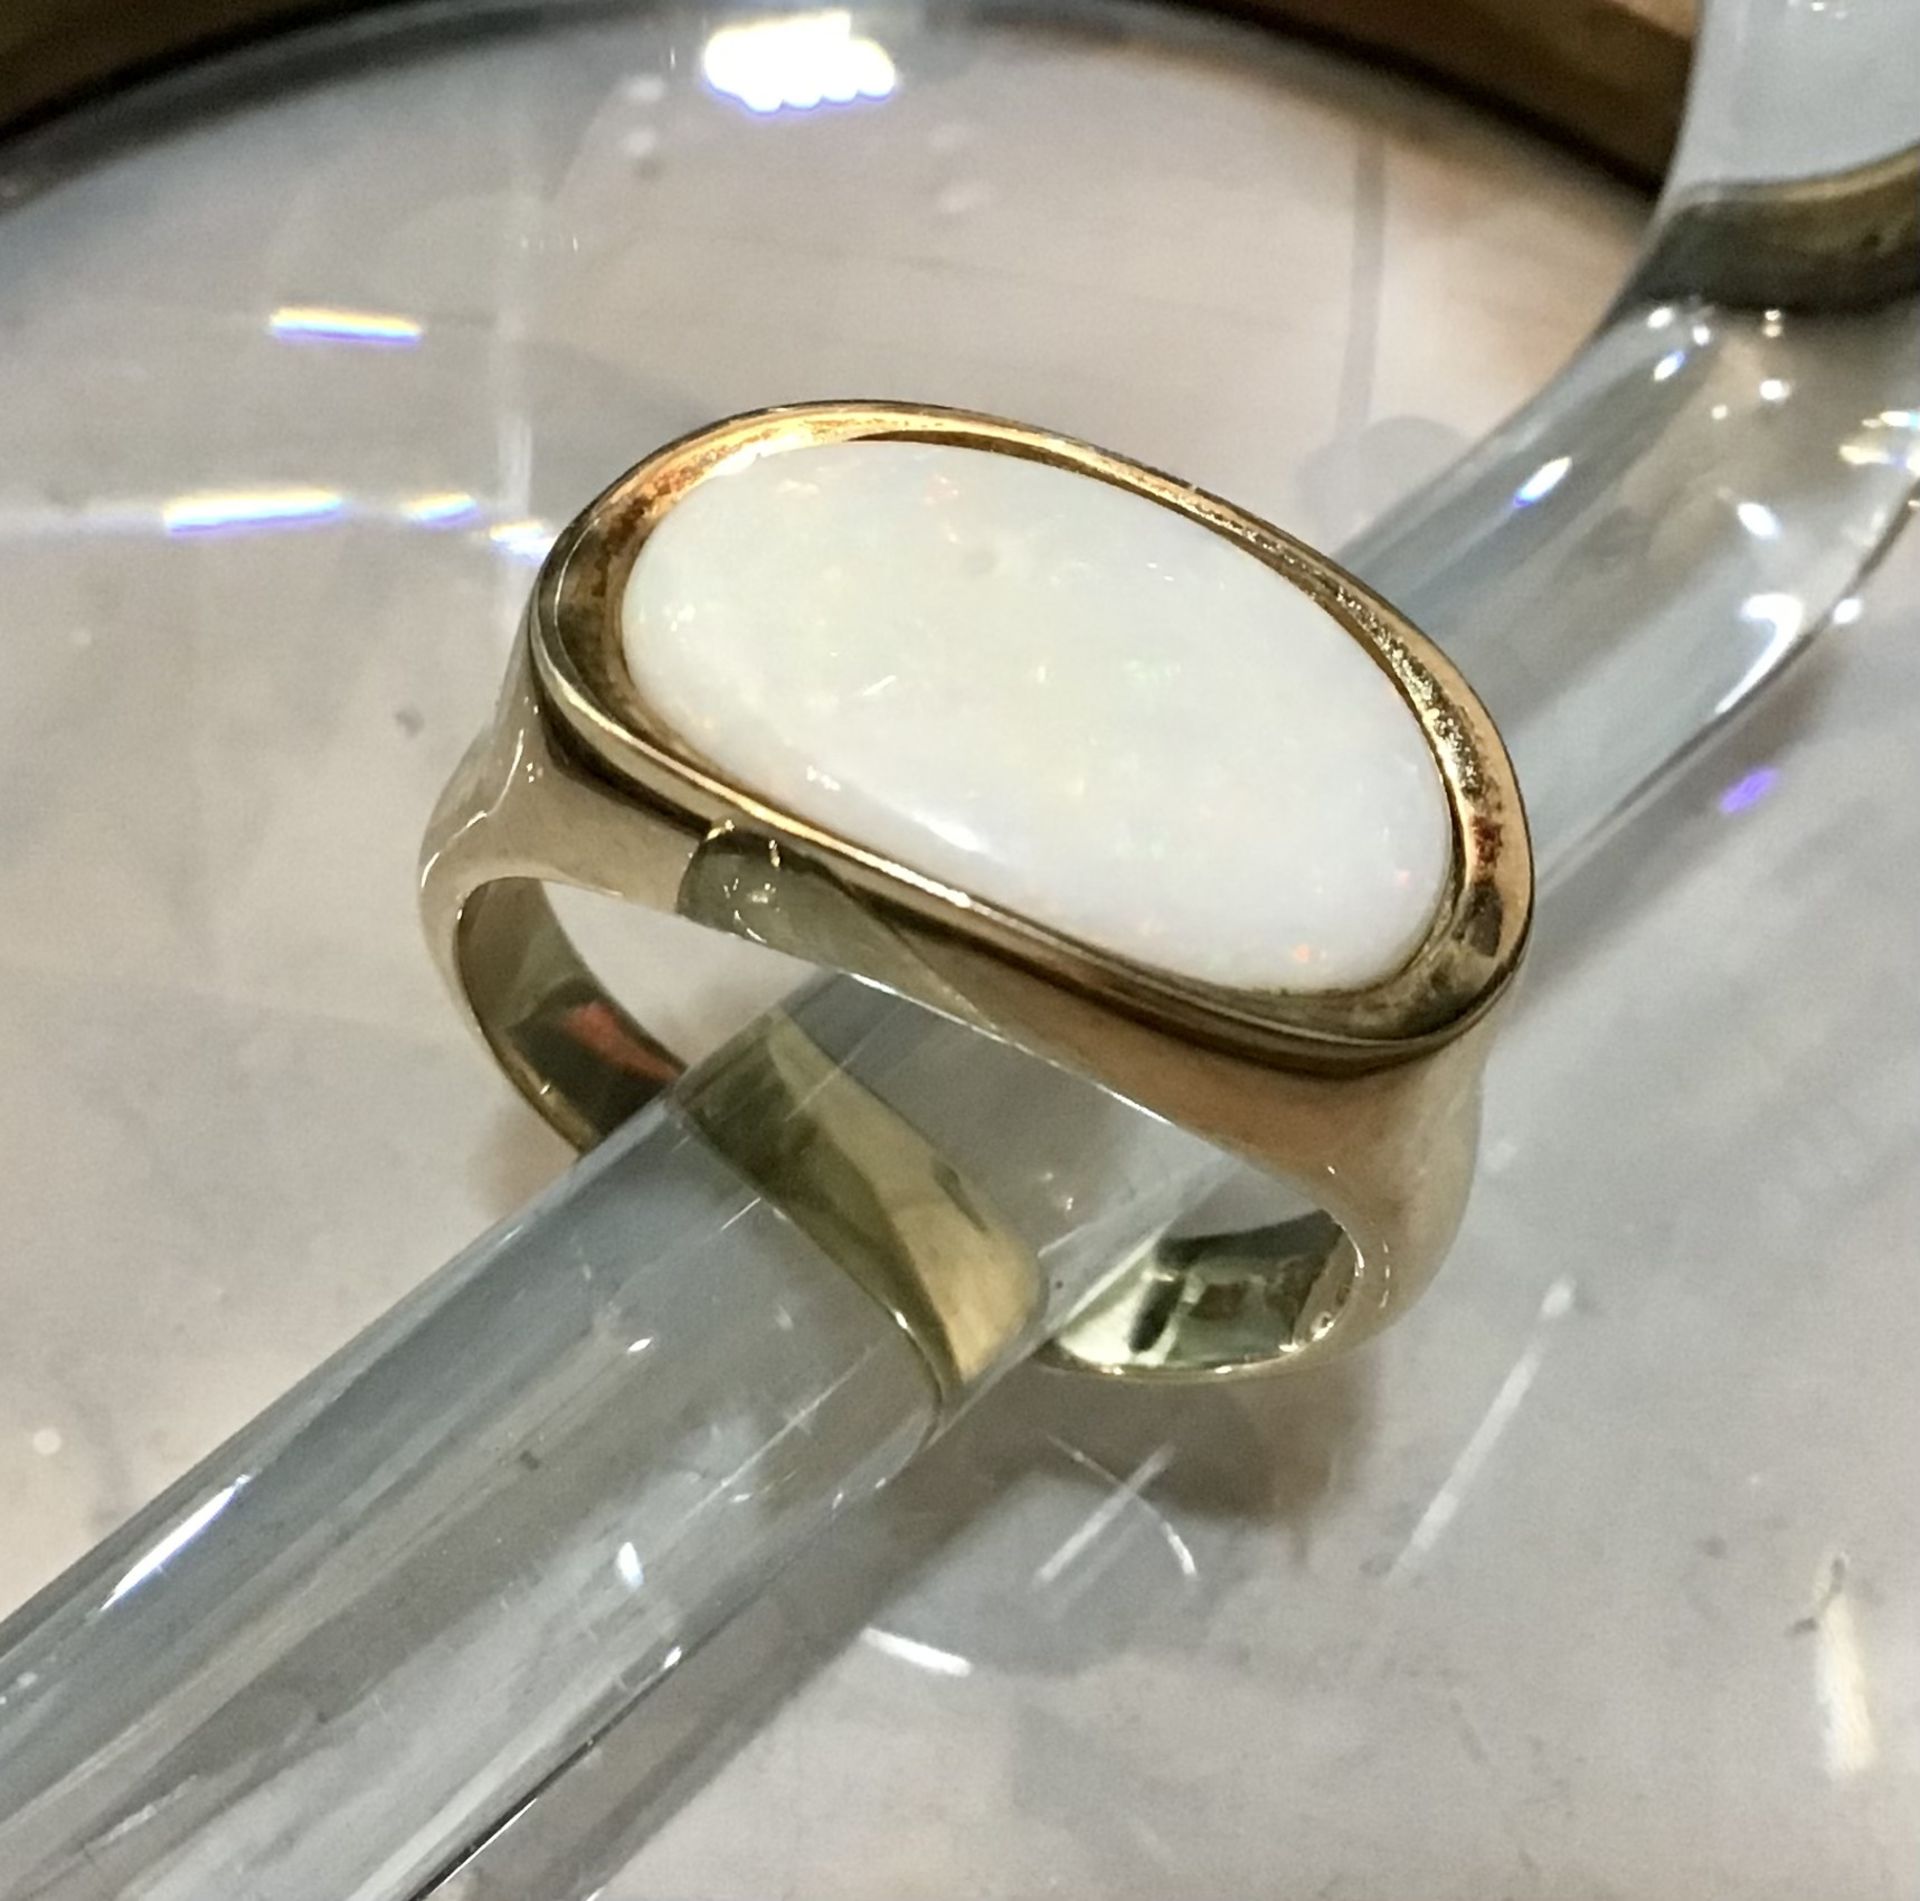 Opal-Damenring, GG 375, Goldschmiedearbeit, ovaler Ringkopf besetzt mit einem Opalcabochon L 1,7 x